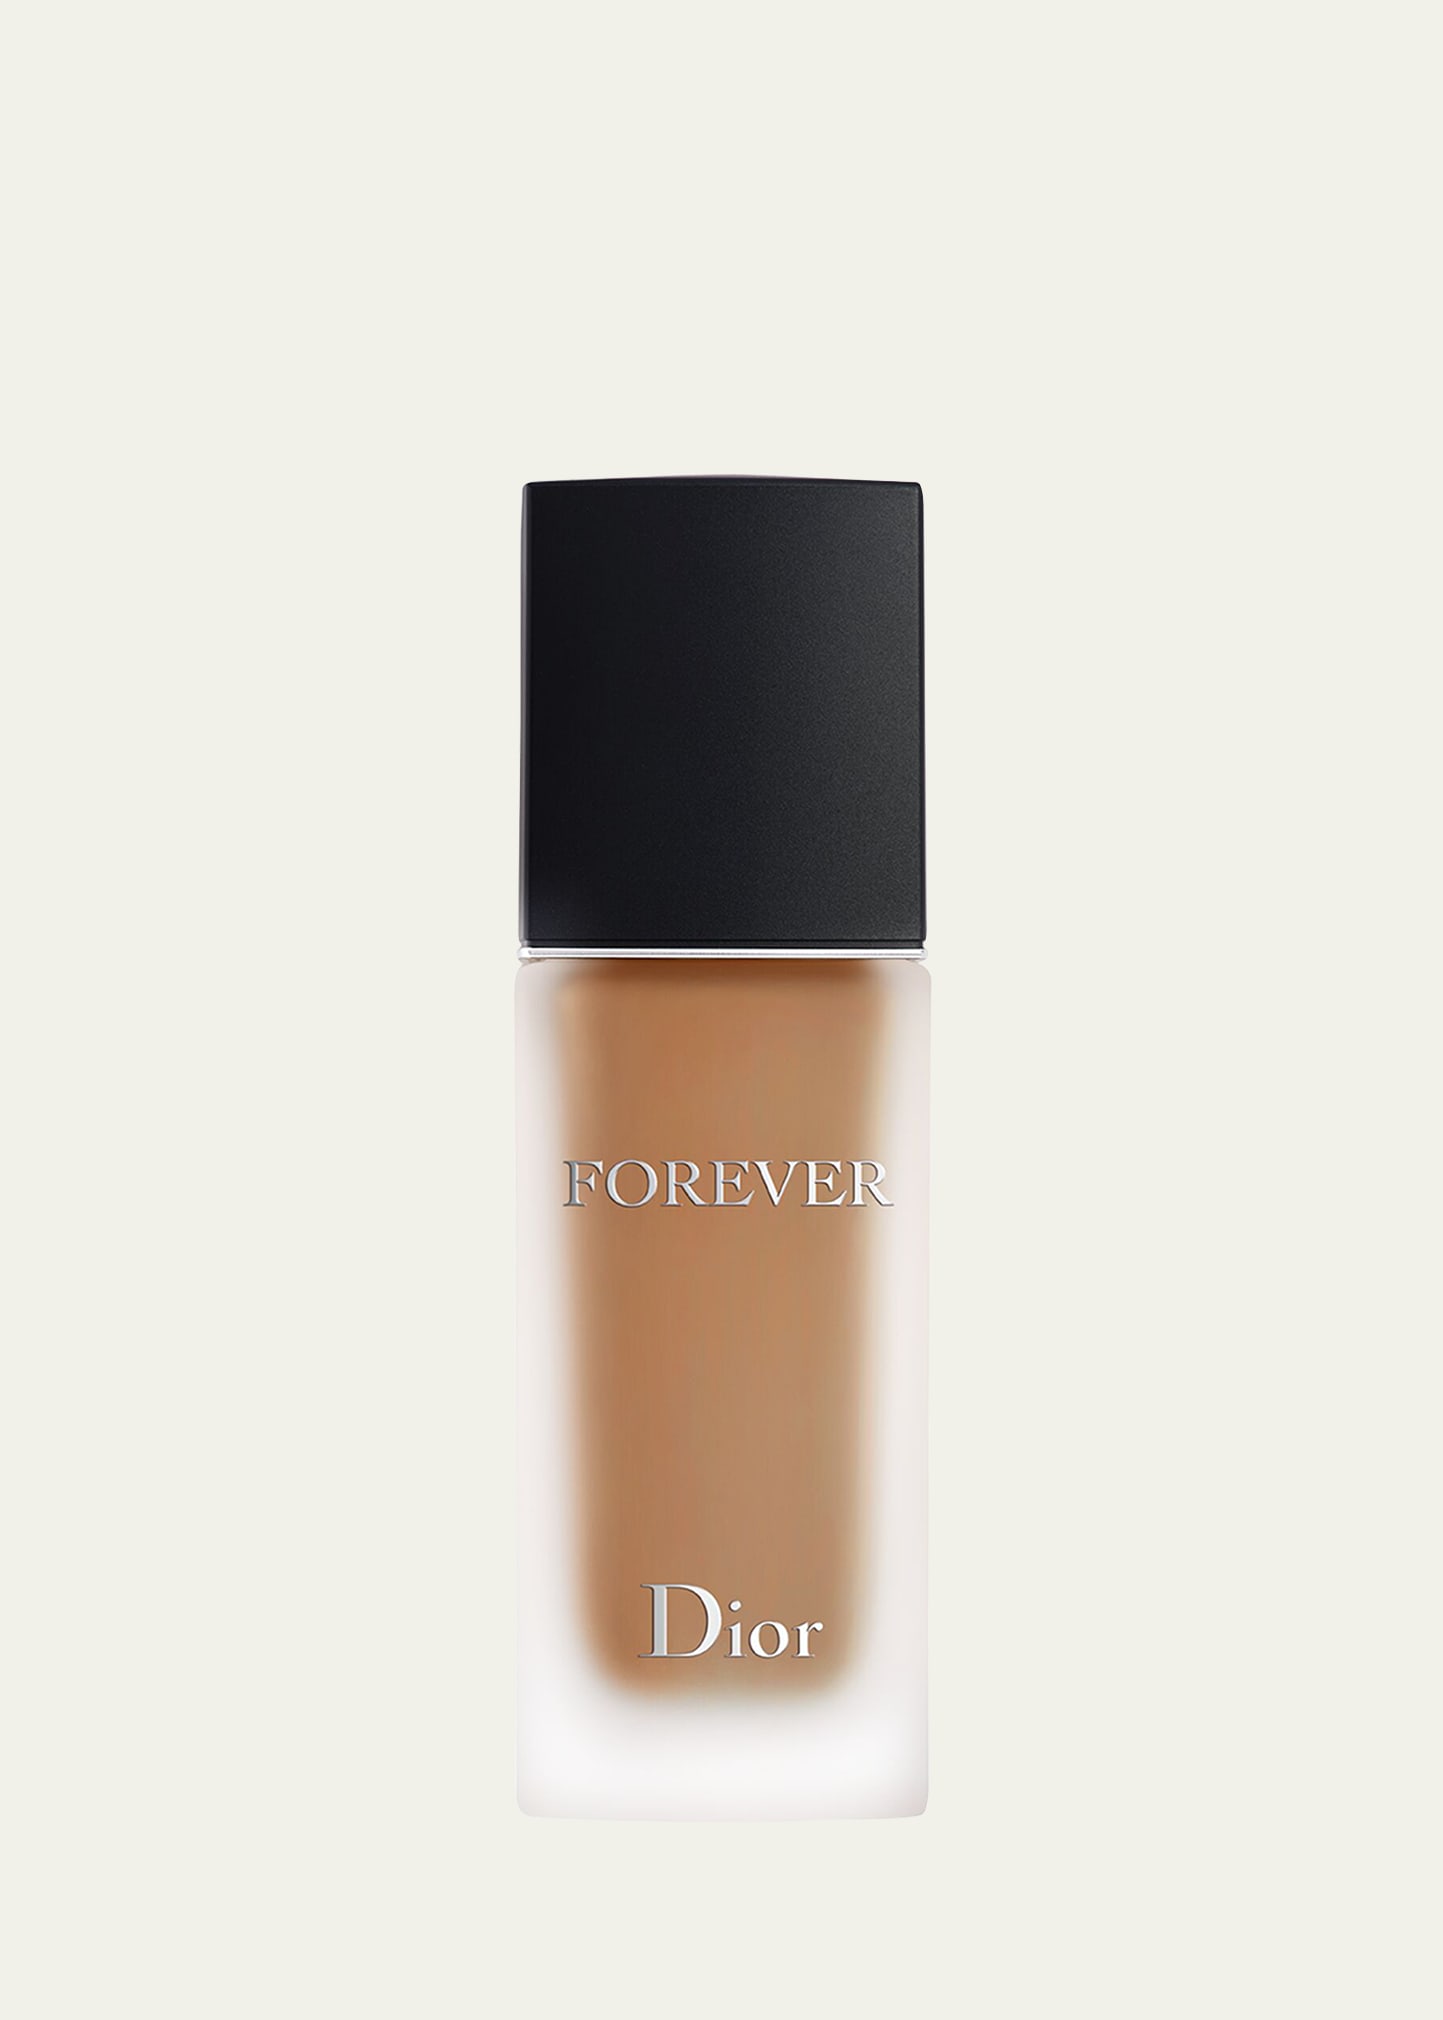 Dior 1 Oz. Forever Matte Skincare Foundation Spf 15 In 4.5 Warm